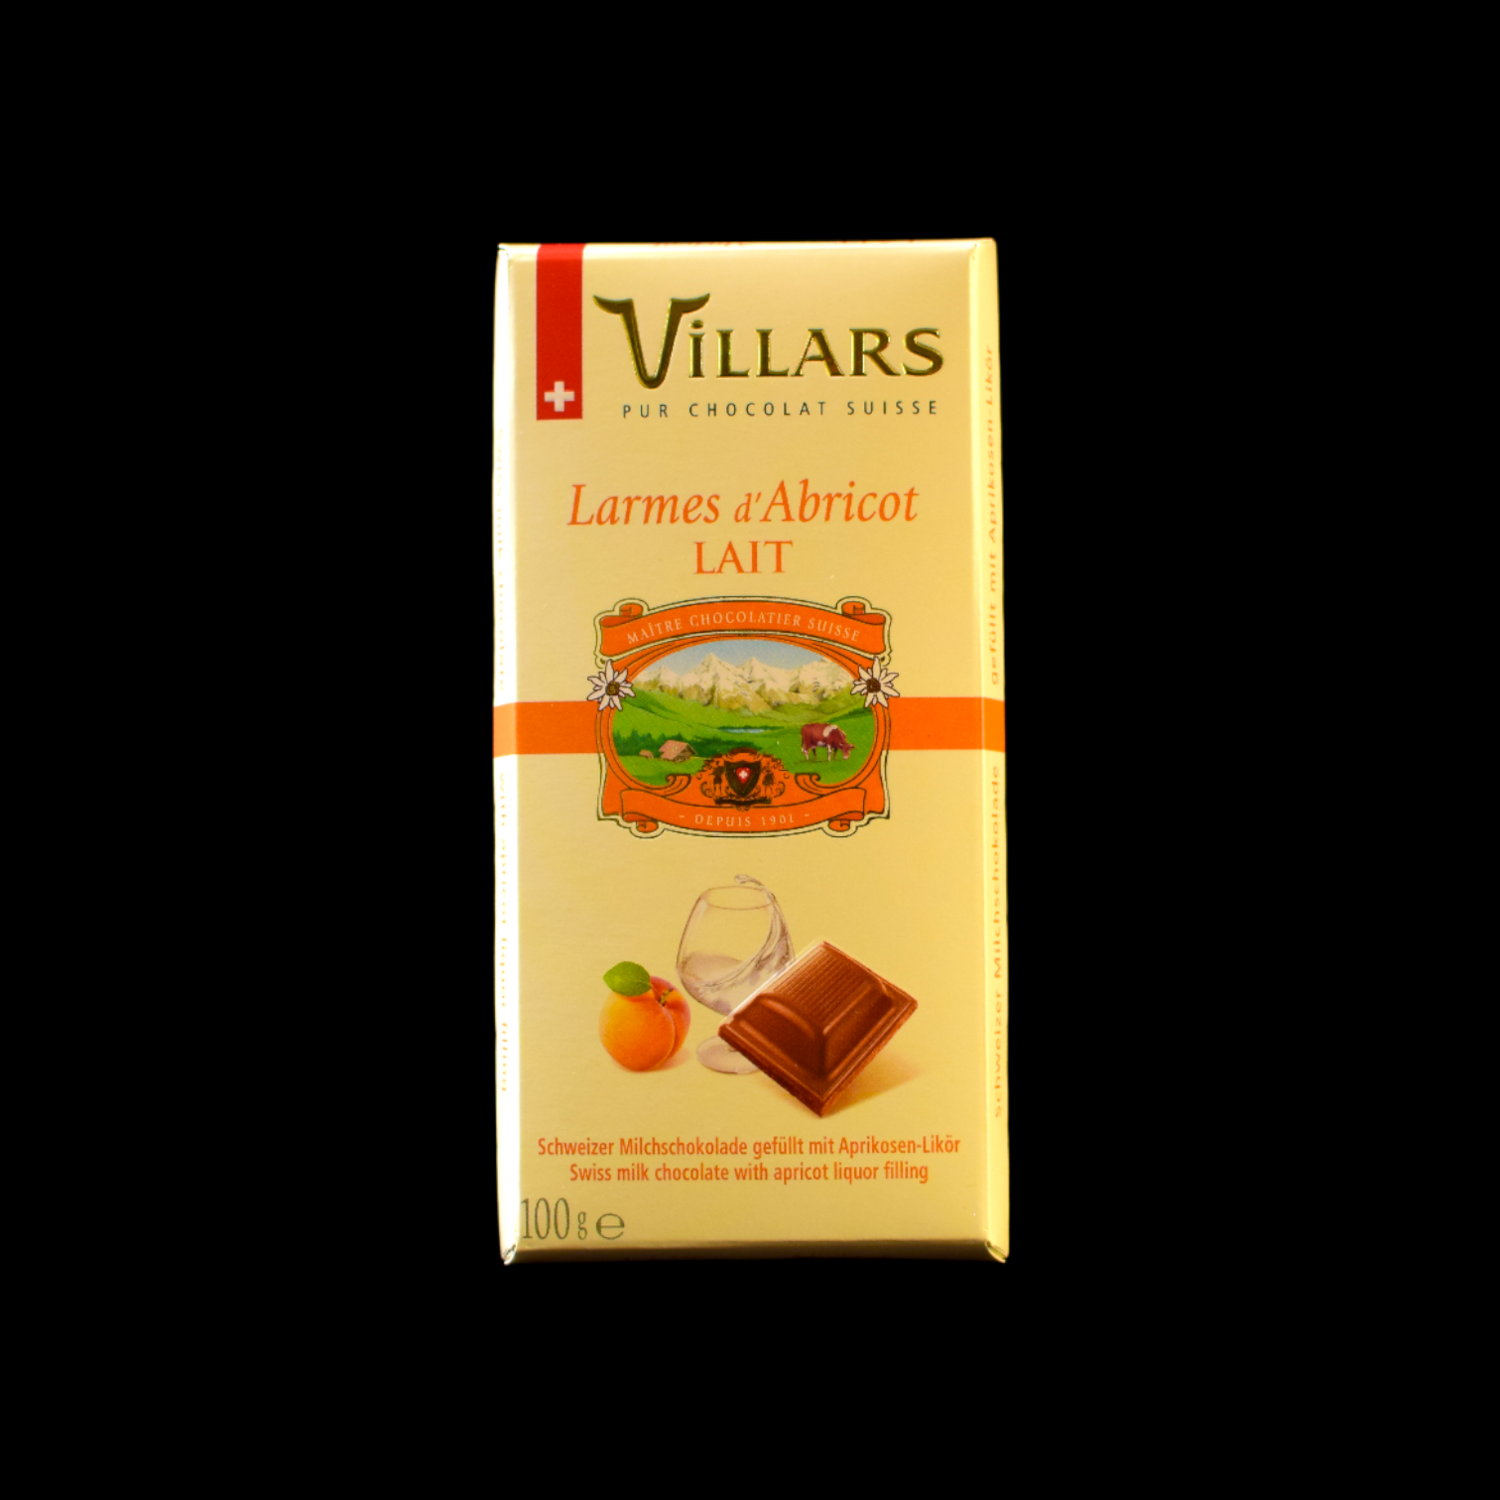 Villars Milchschokolade gefüllt mit Aprikosen- Likör